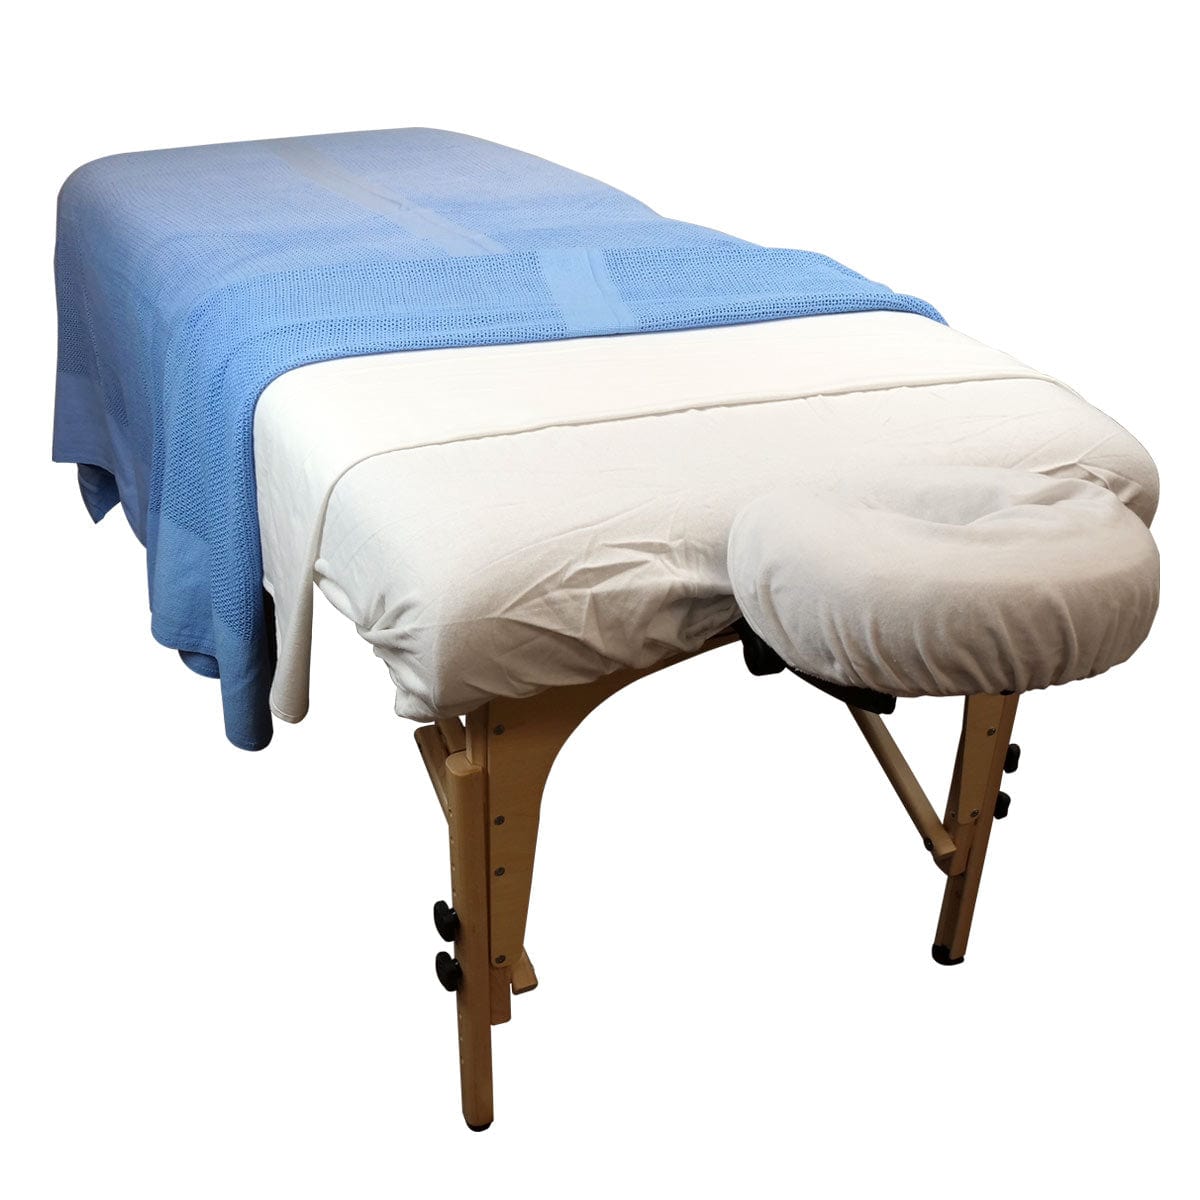 Blue Cotton Weave Massage Table Blanket